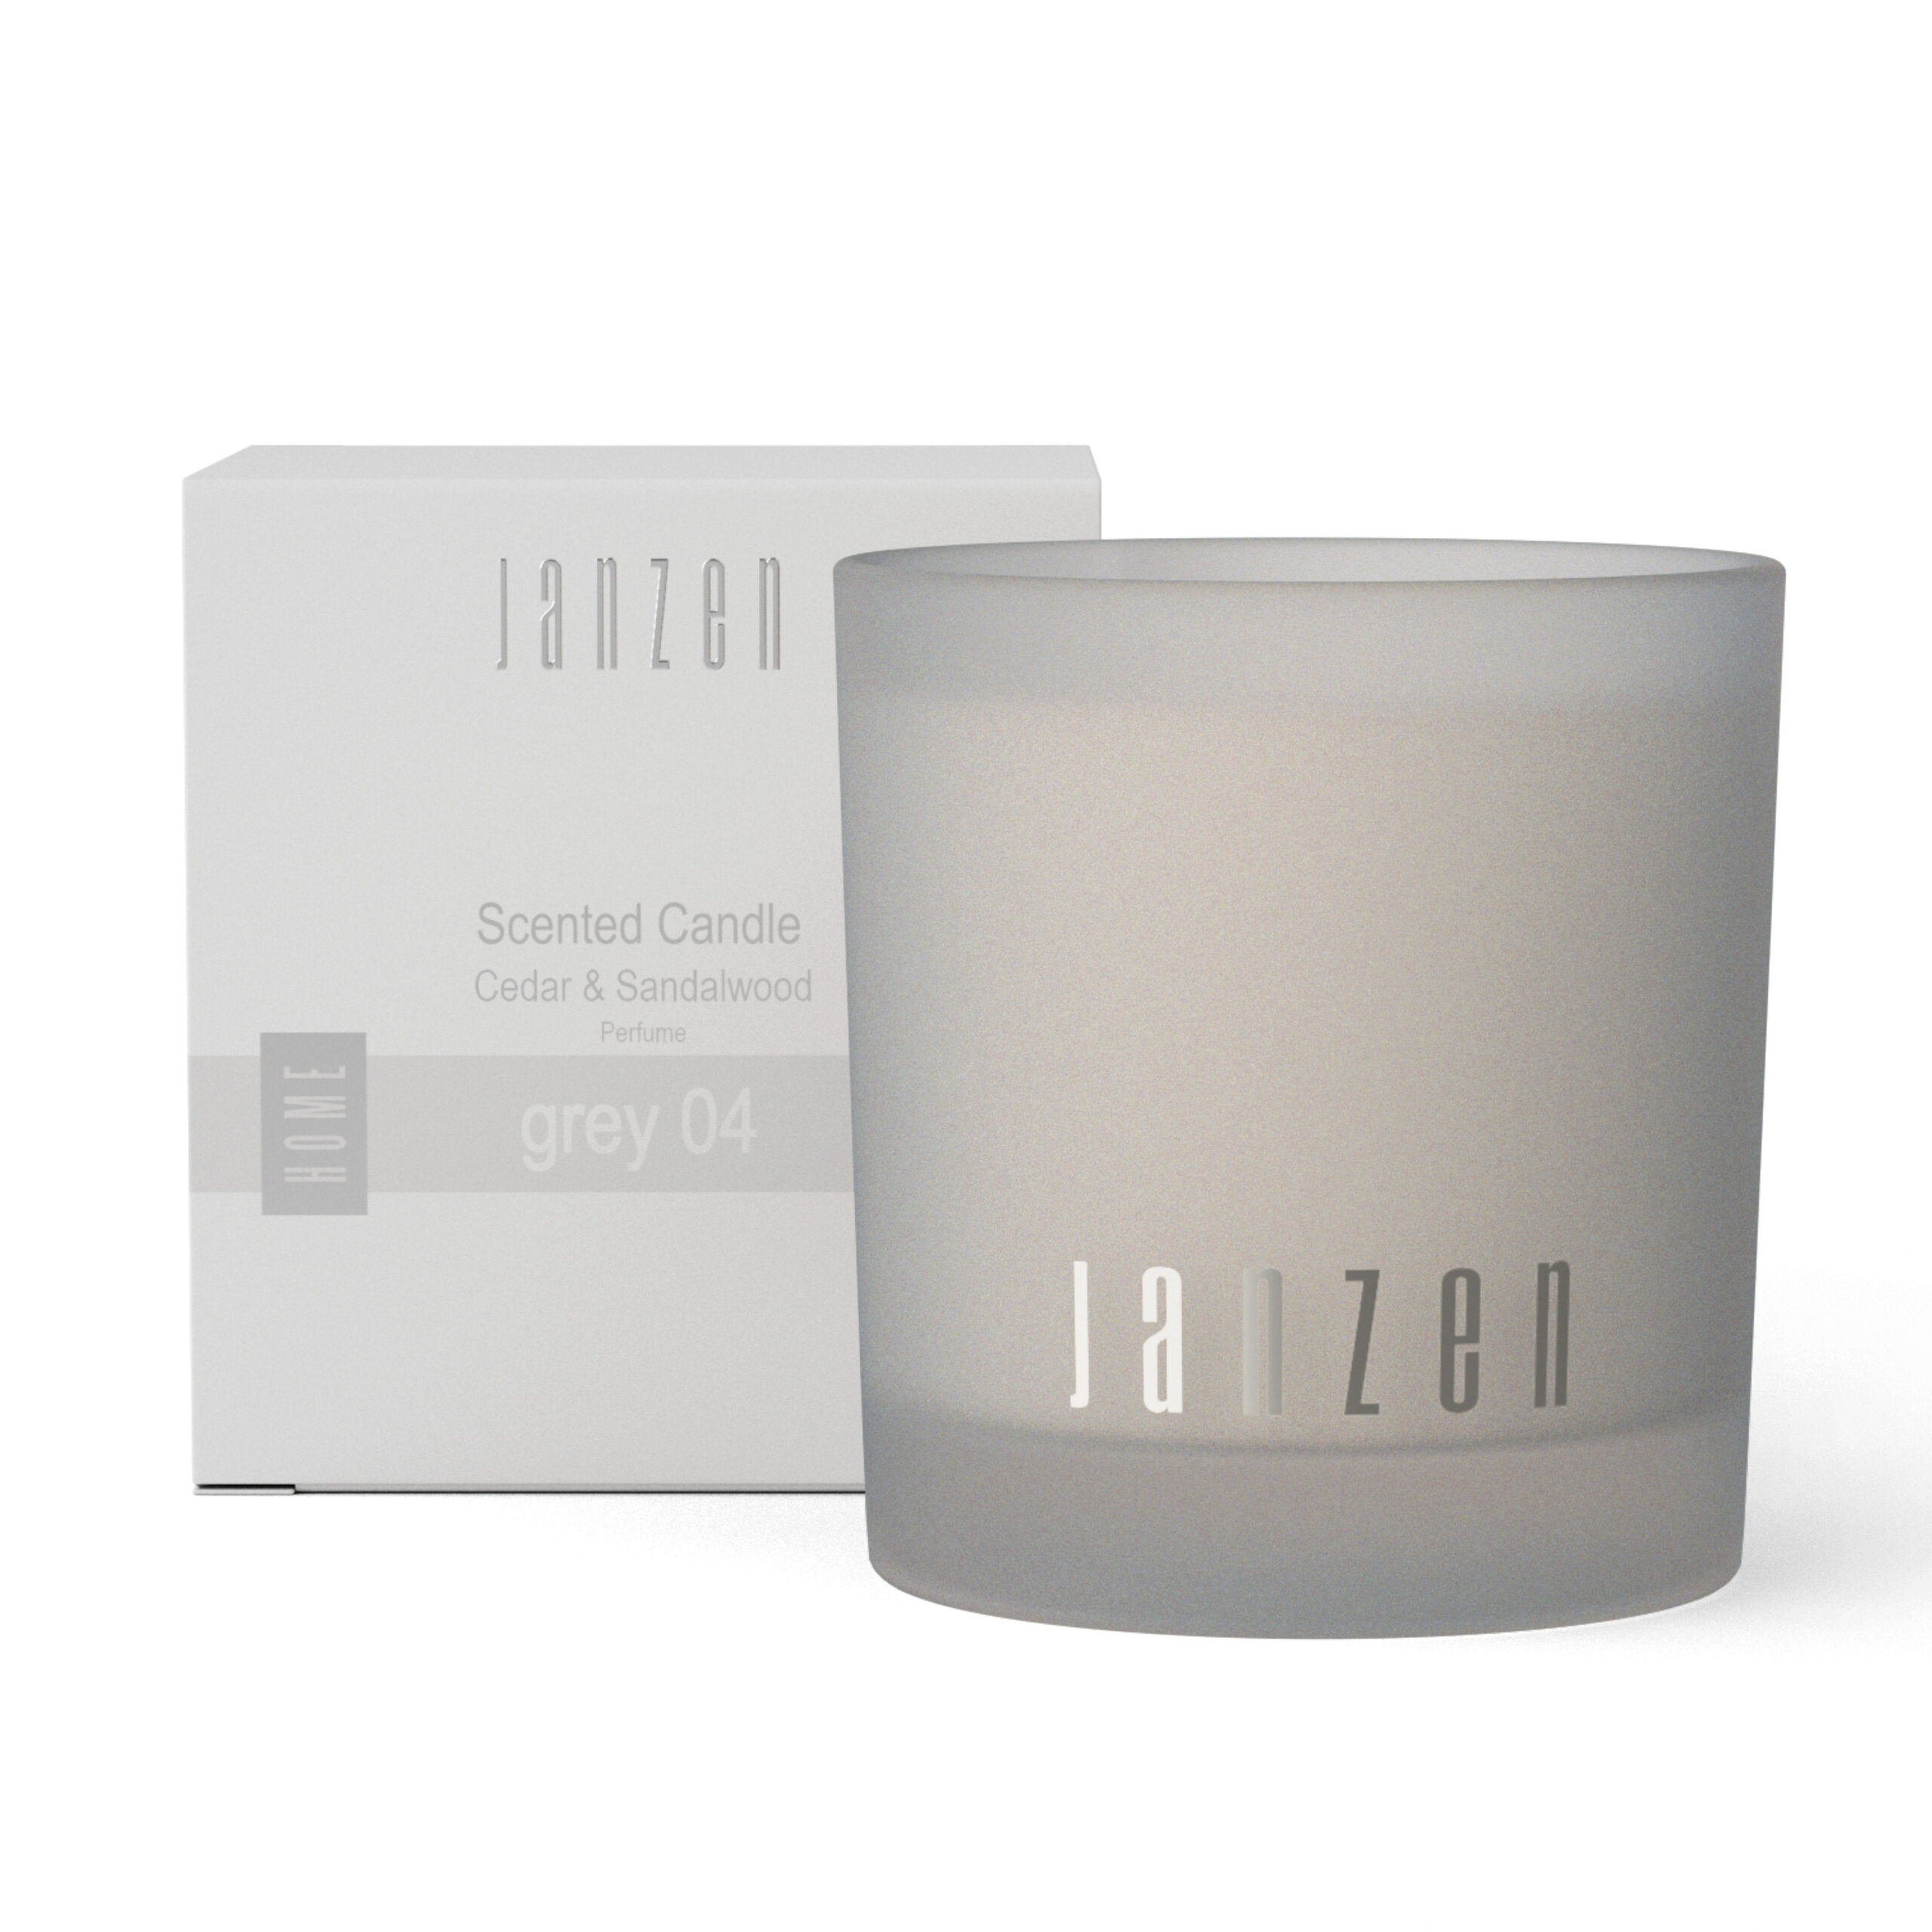 Janzen Scented Candle Grey 04 210 Gram